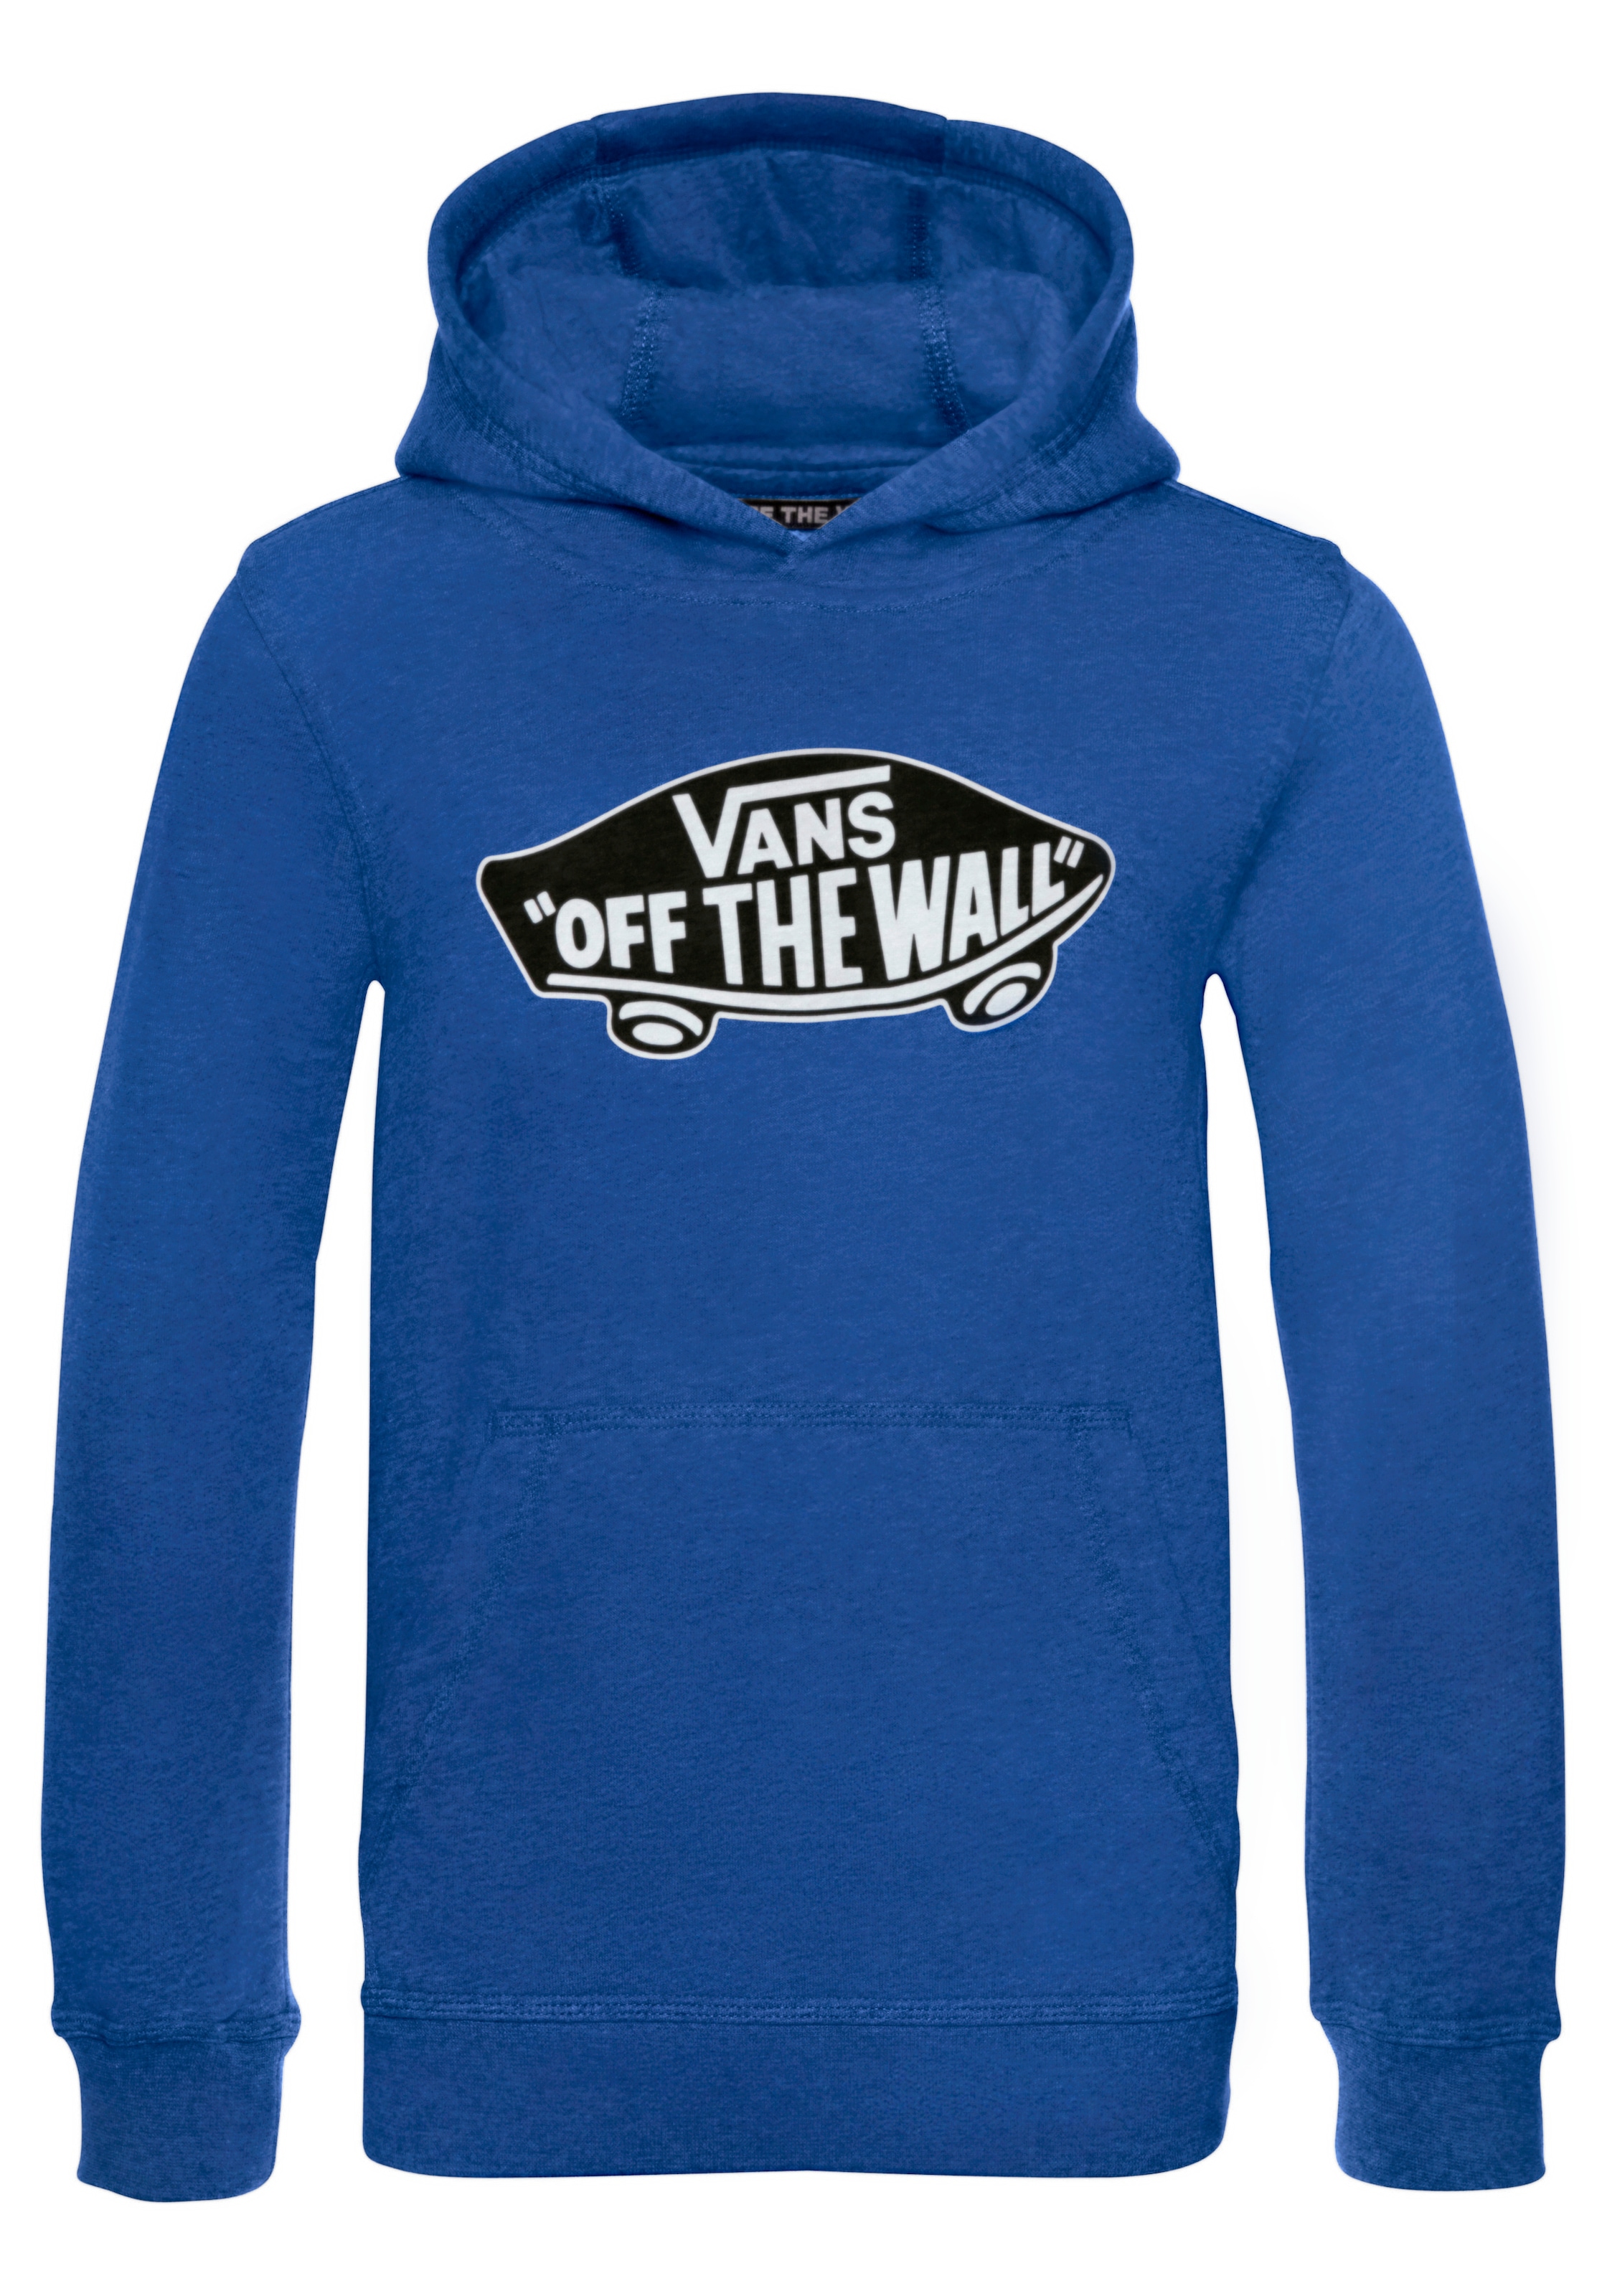 »OTW Vans PO«, online Kapuzensweatshirt mit bei Logodruck